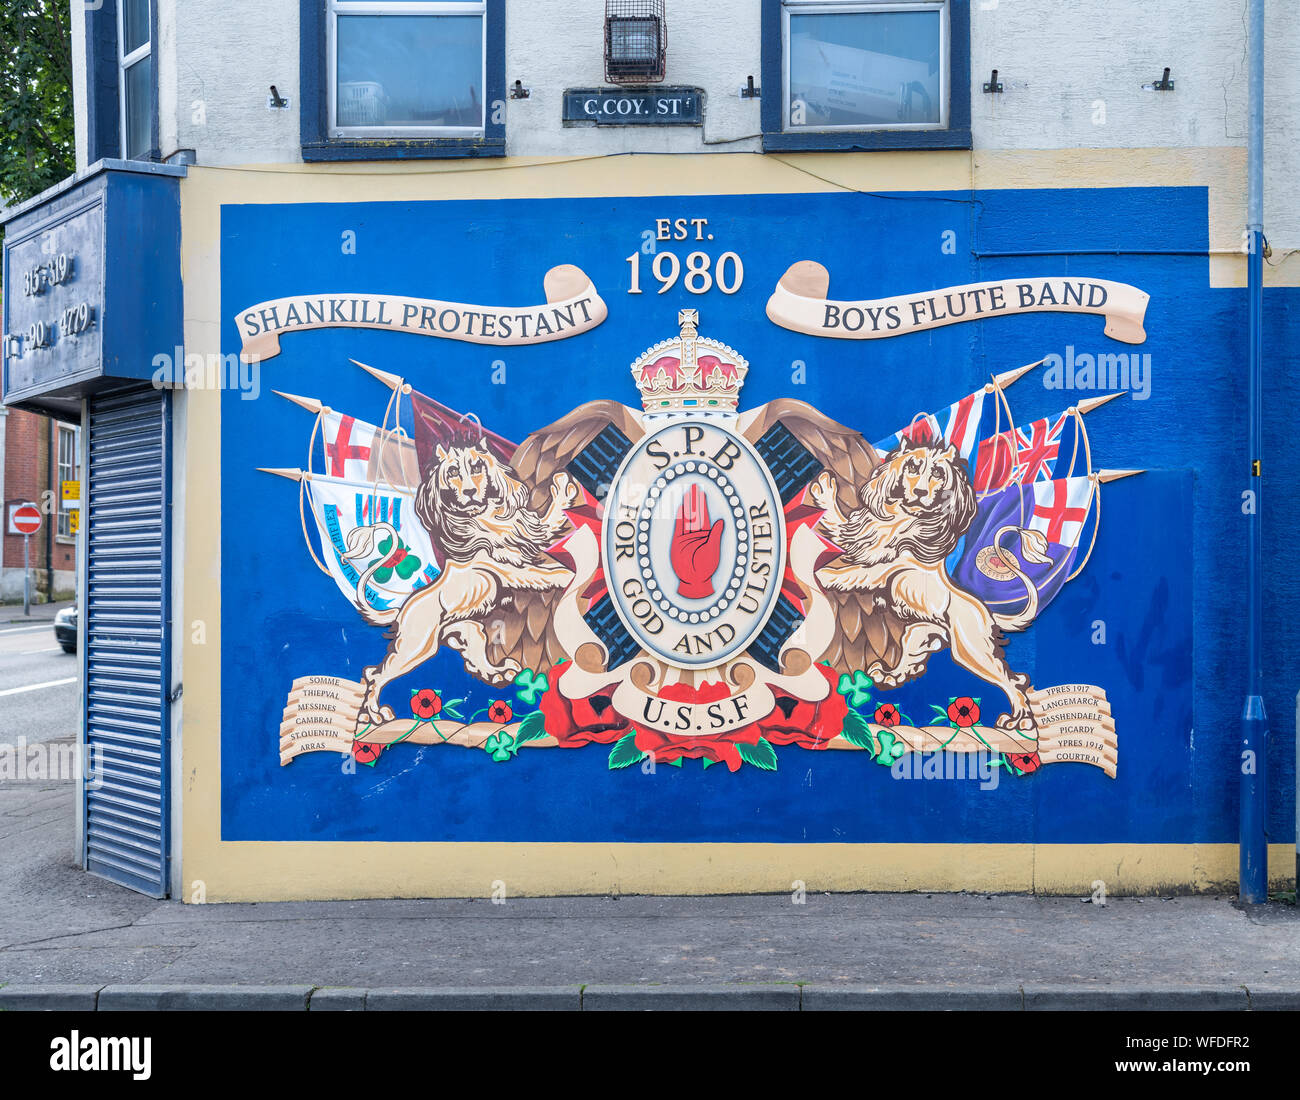 Shankill Protestant Boys Flute Band Mural, Belfast, northern Ireland Stock Photo